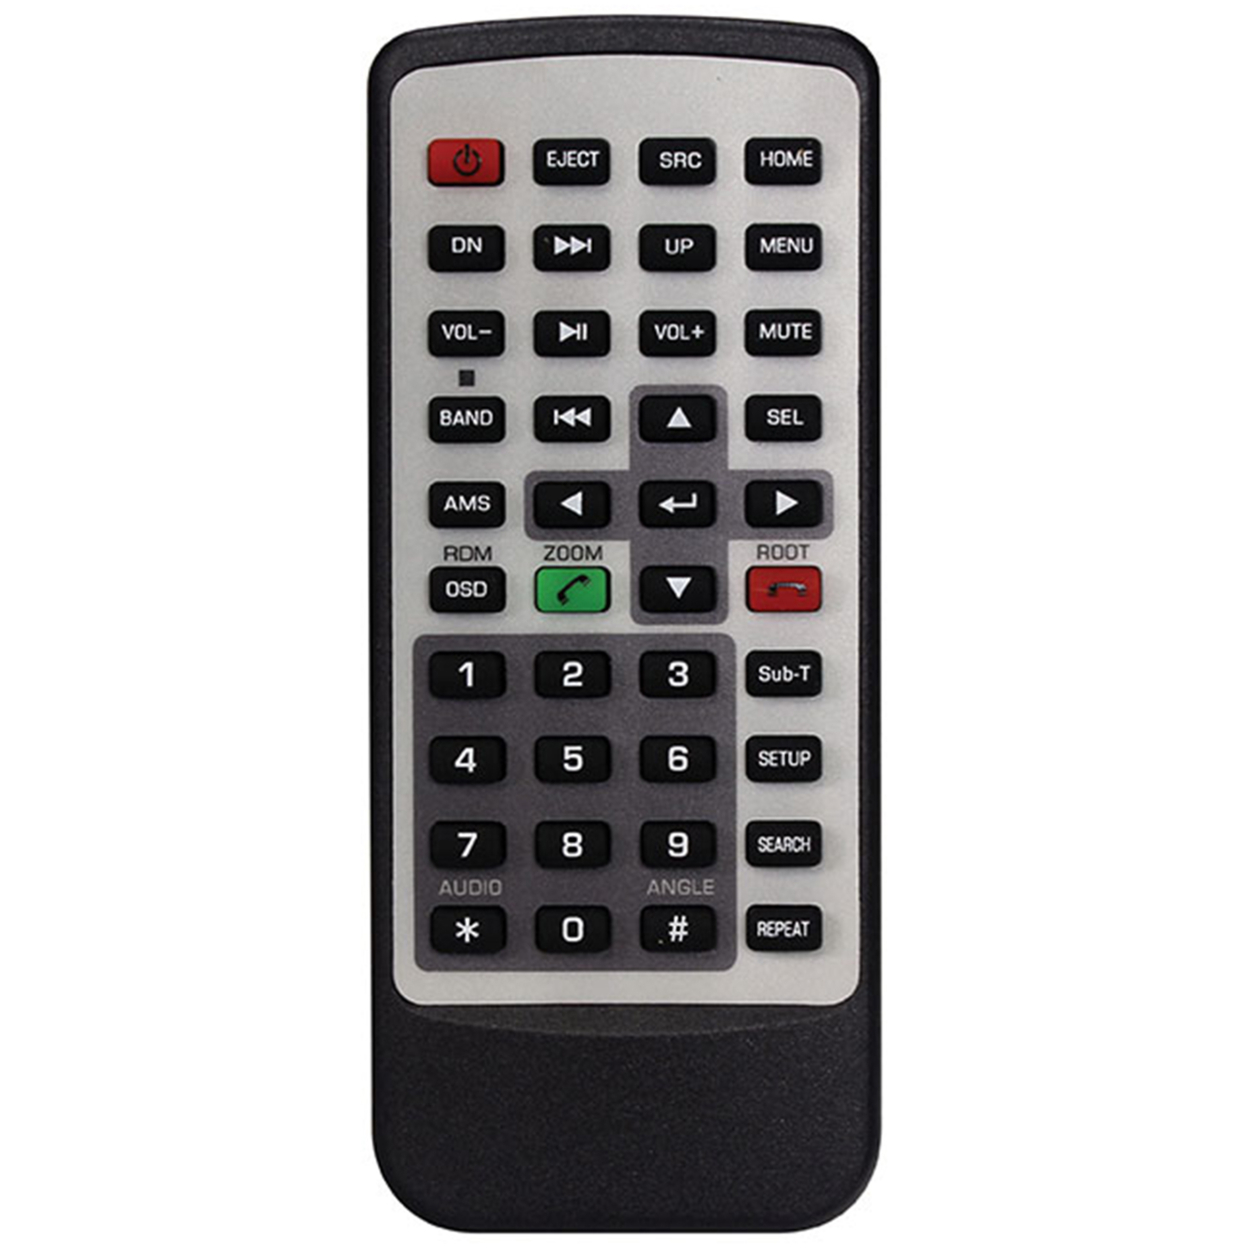 Power ACOUSTIK PD-623B 2-DIN DVD, CD/MP3, AM/FM Receiver 2/6.2' LCD & Bluetooth 4.0, Black